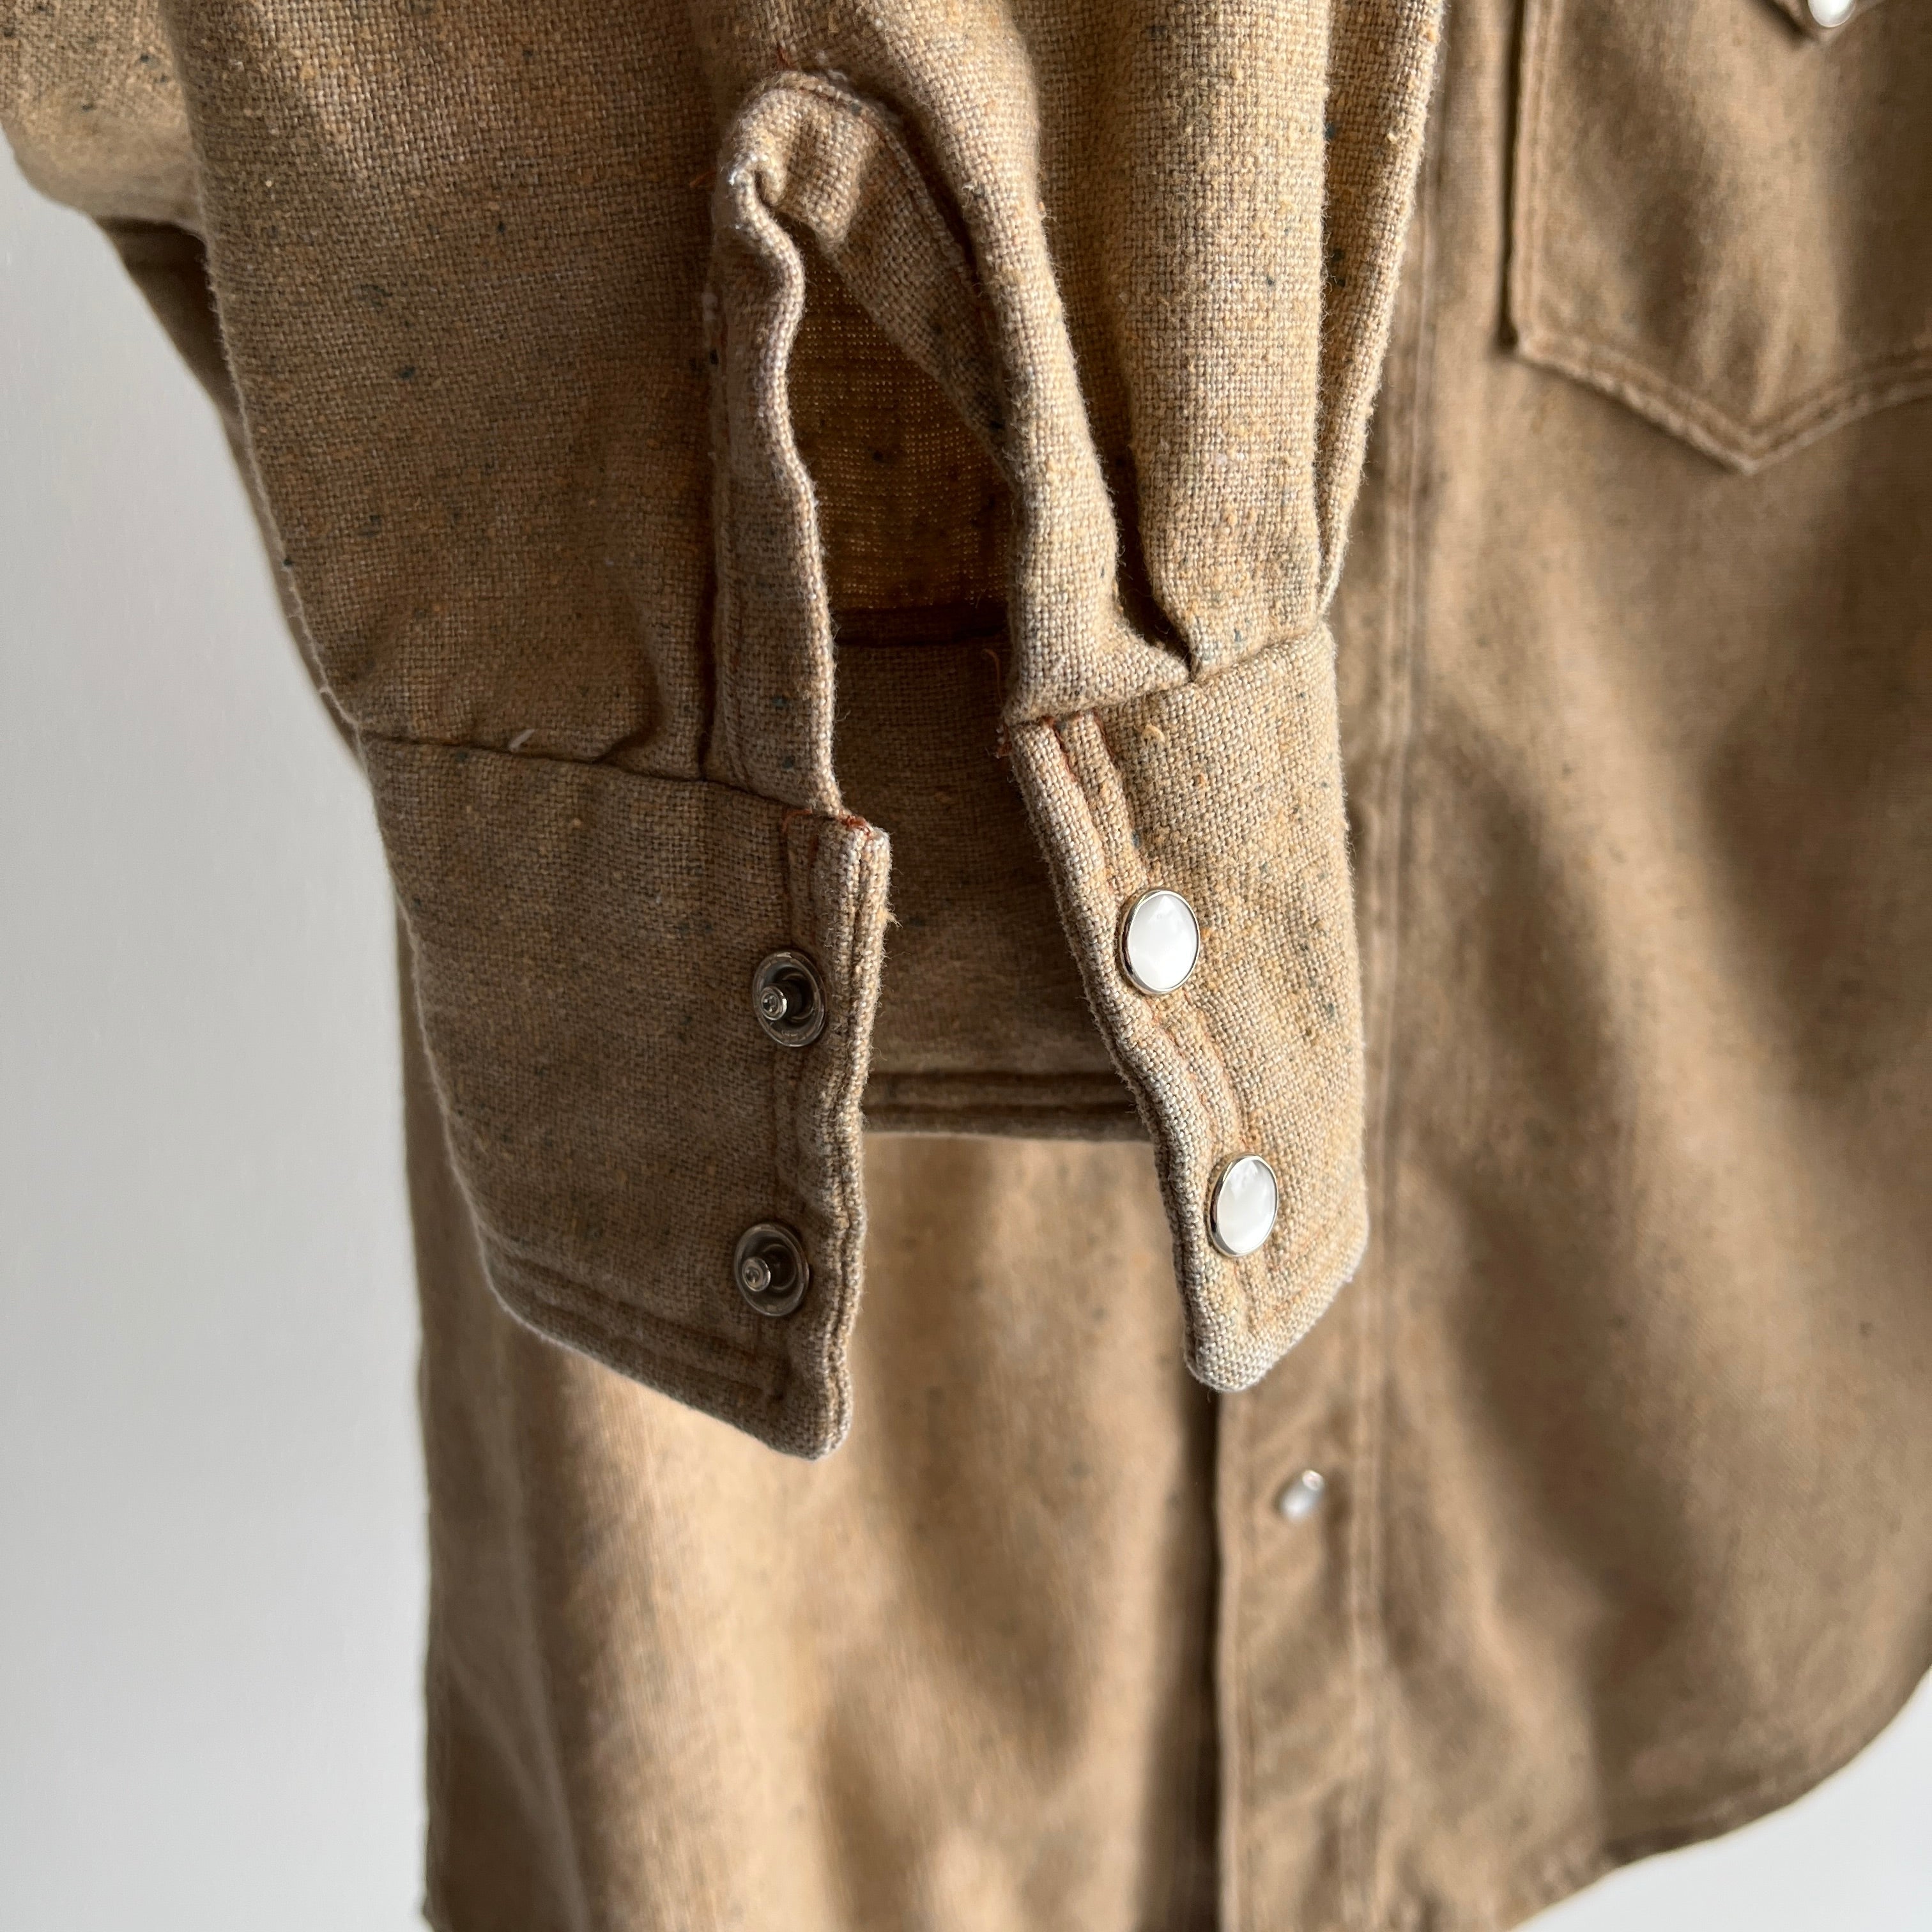 1970s Custom Made Corduroy and Cotton Cowboy Shirt